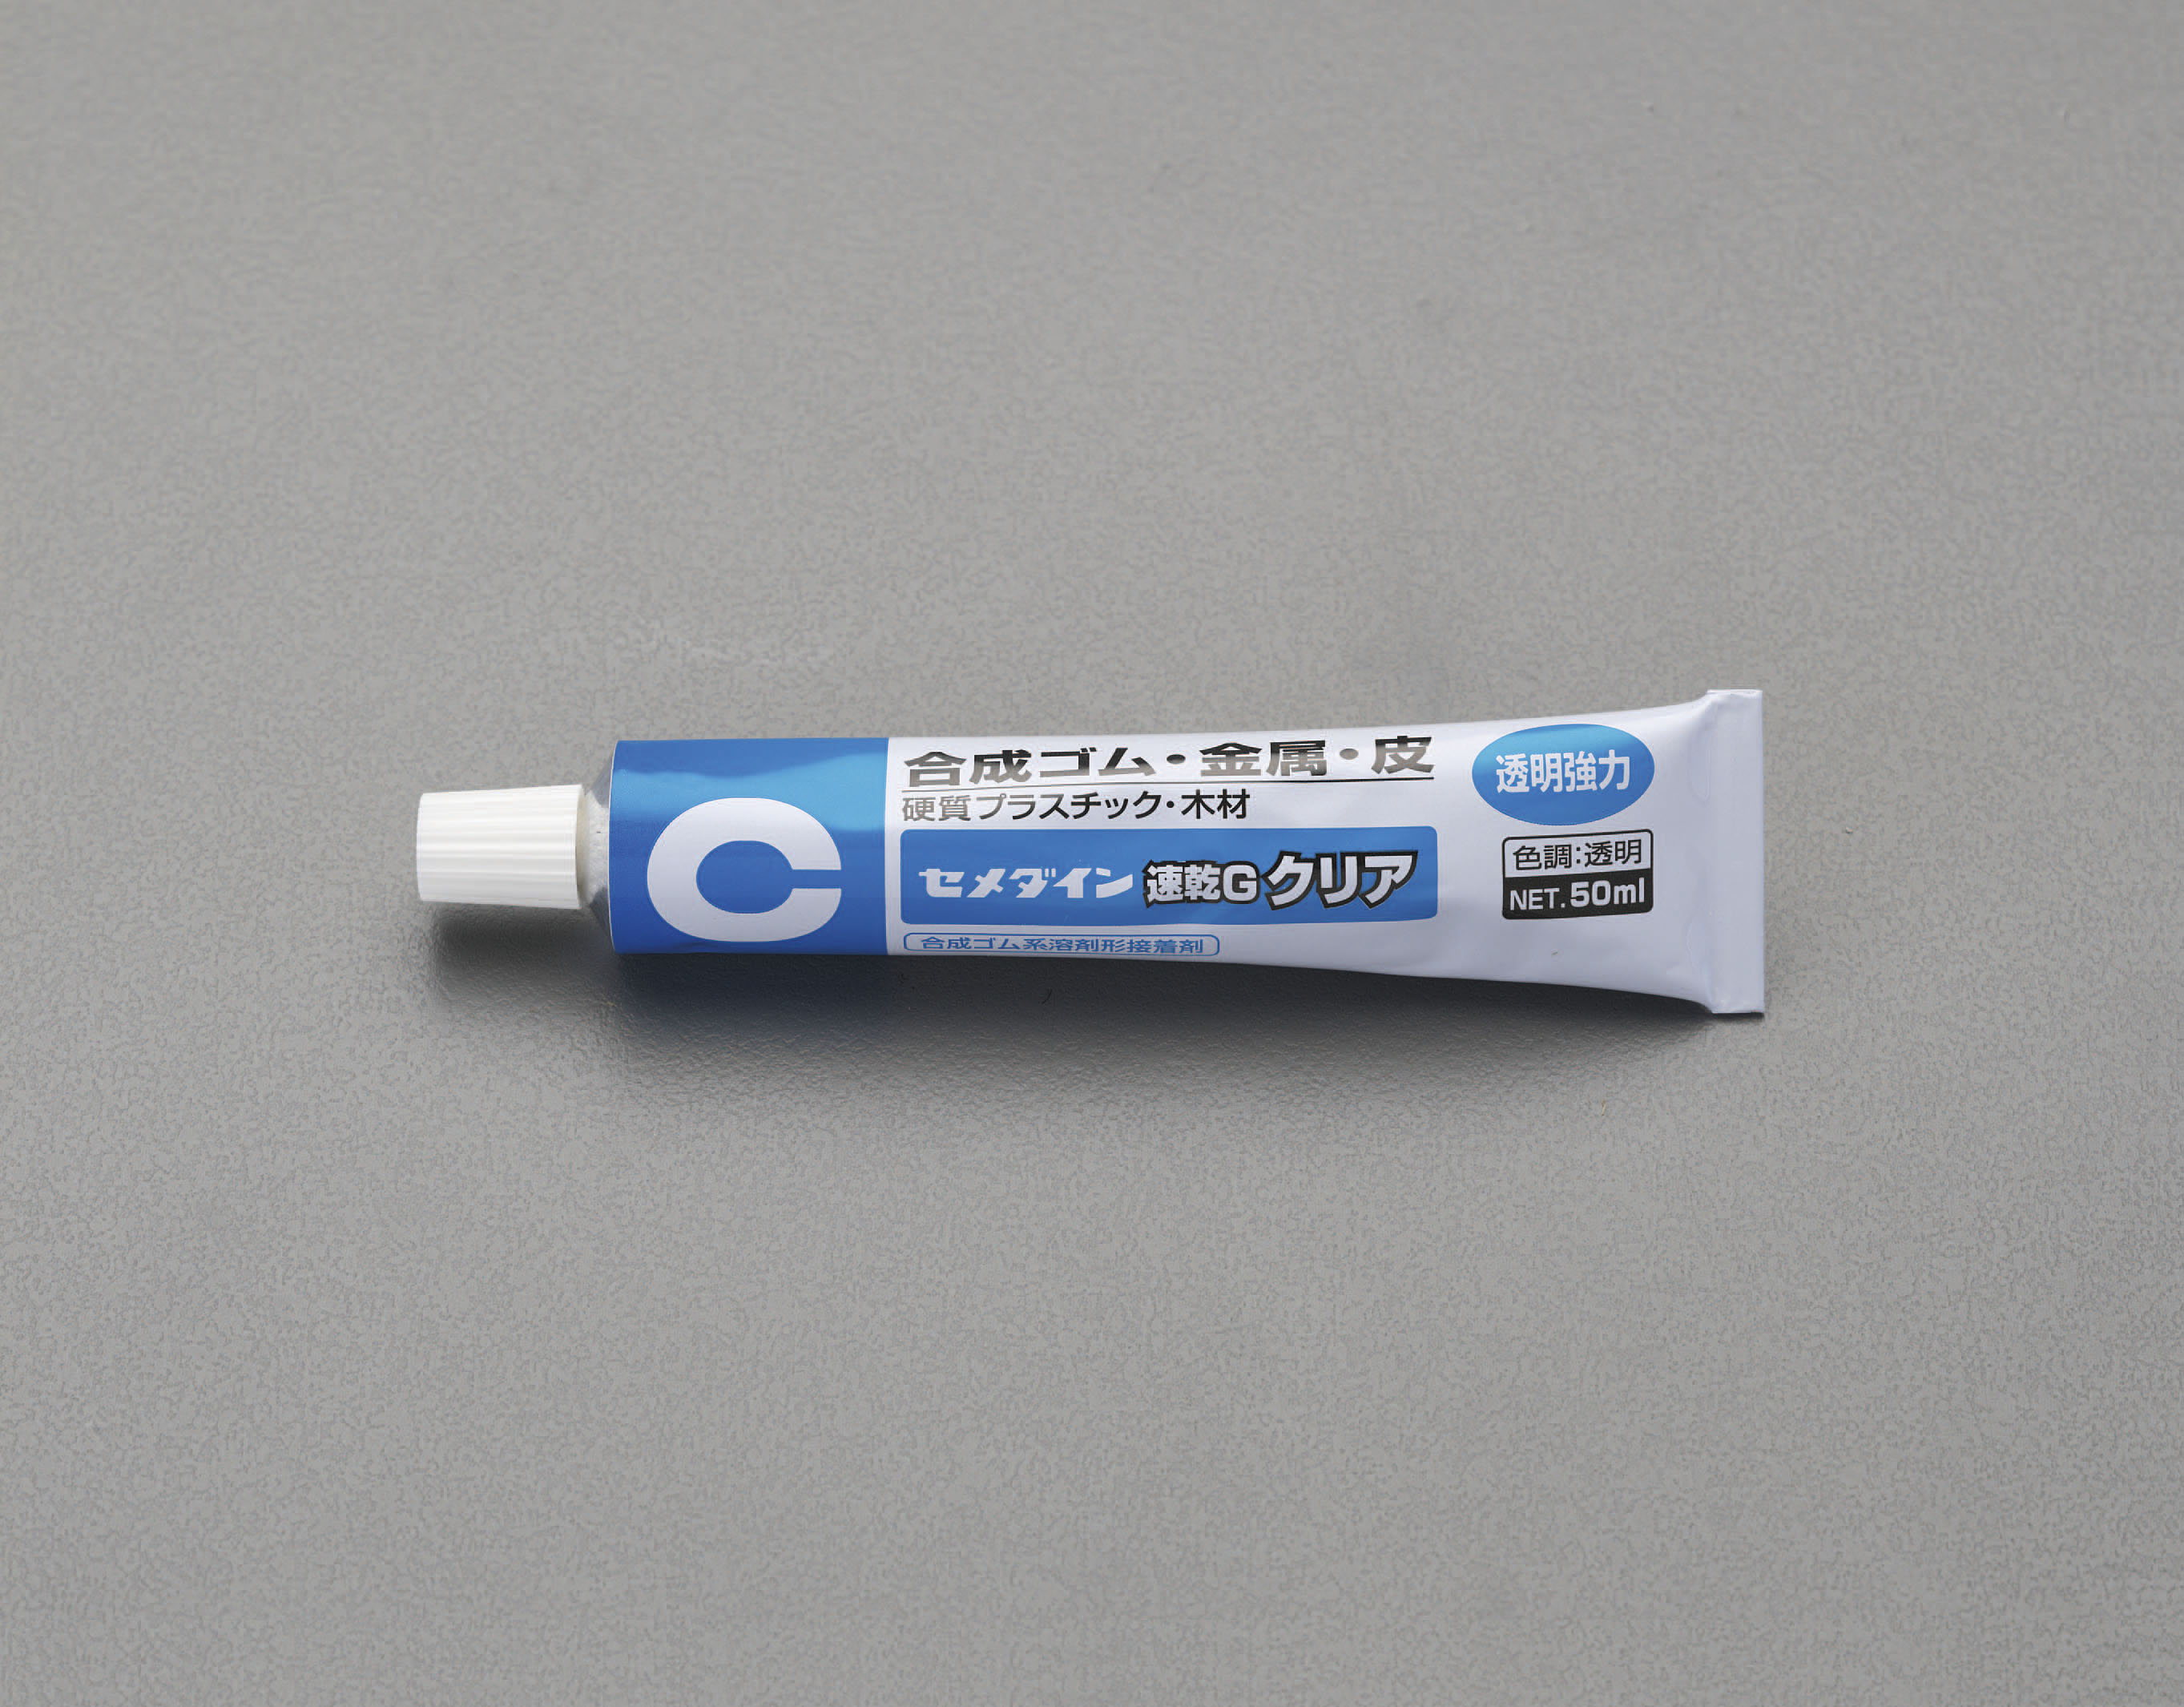 Ea935n 10 50ml 合成ゴム系接着剤のページ Sakkey エスコの商品を検索